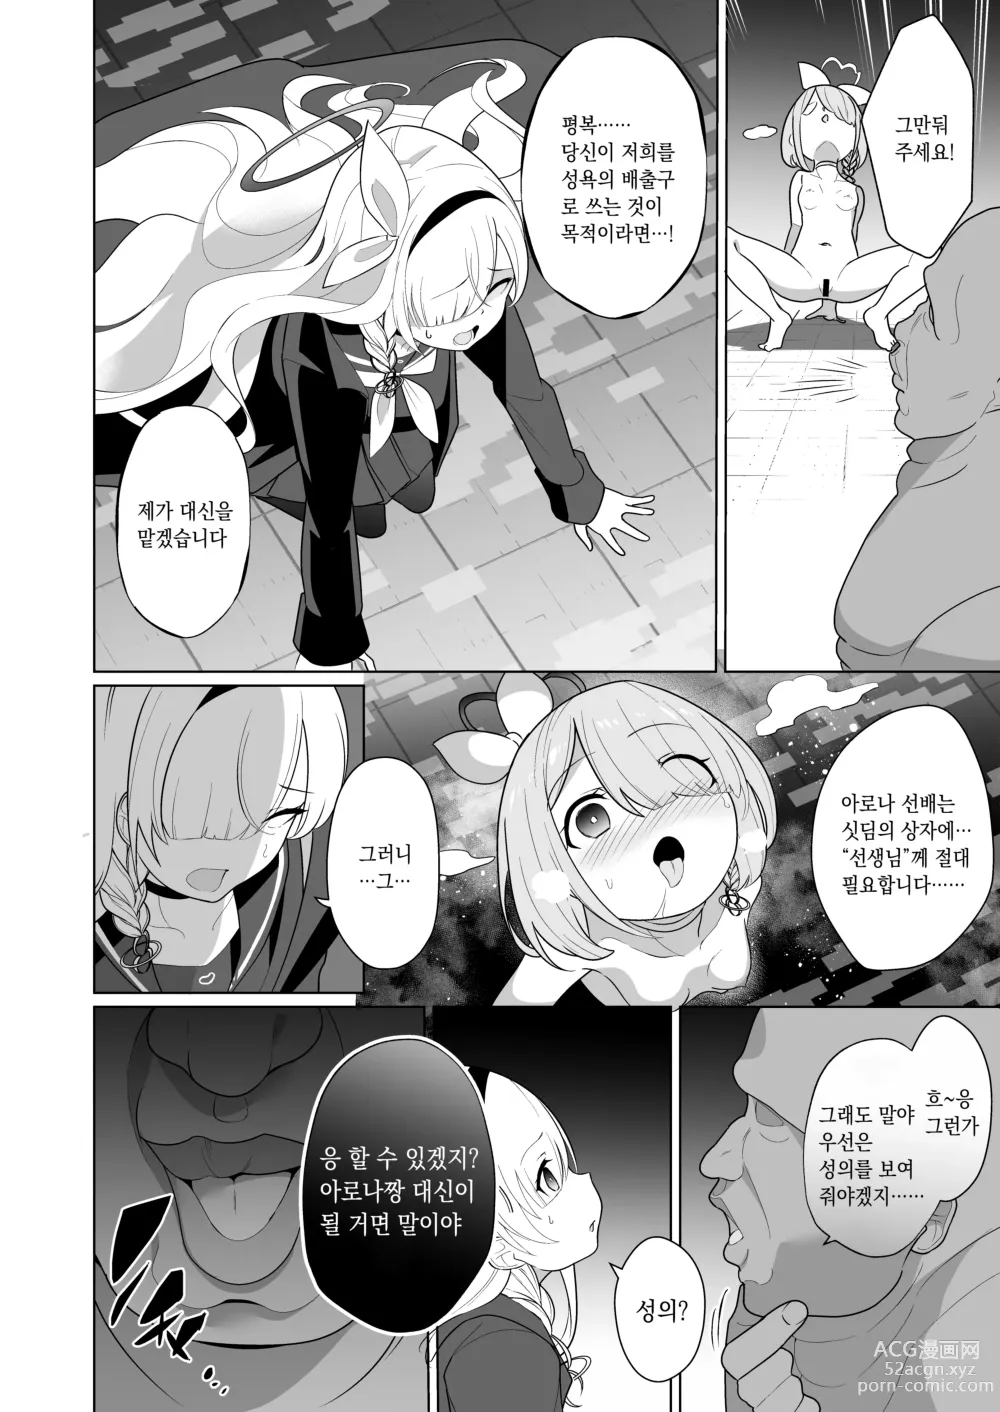 Page 9 of doujinshi 싫어하는 프라나가 기꺼이 봉사하는 이야기